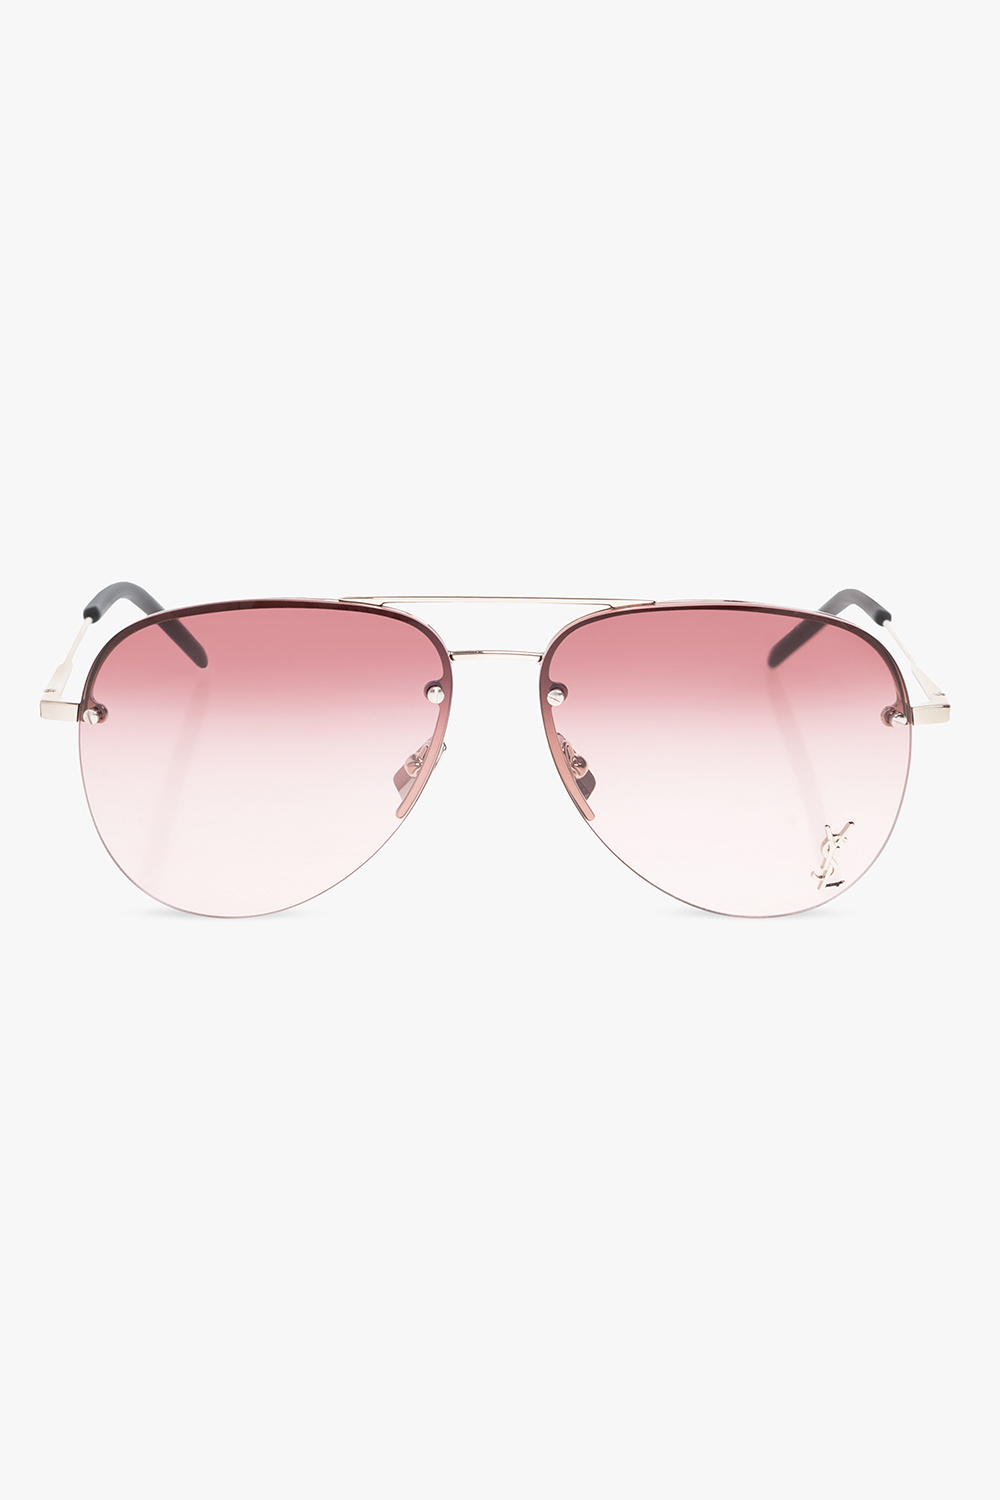 Saint Laurent ‘CLASSIC 11 M’ RALPH sunglasses